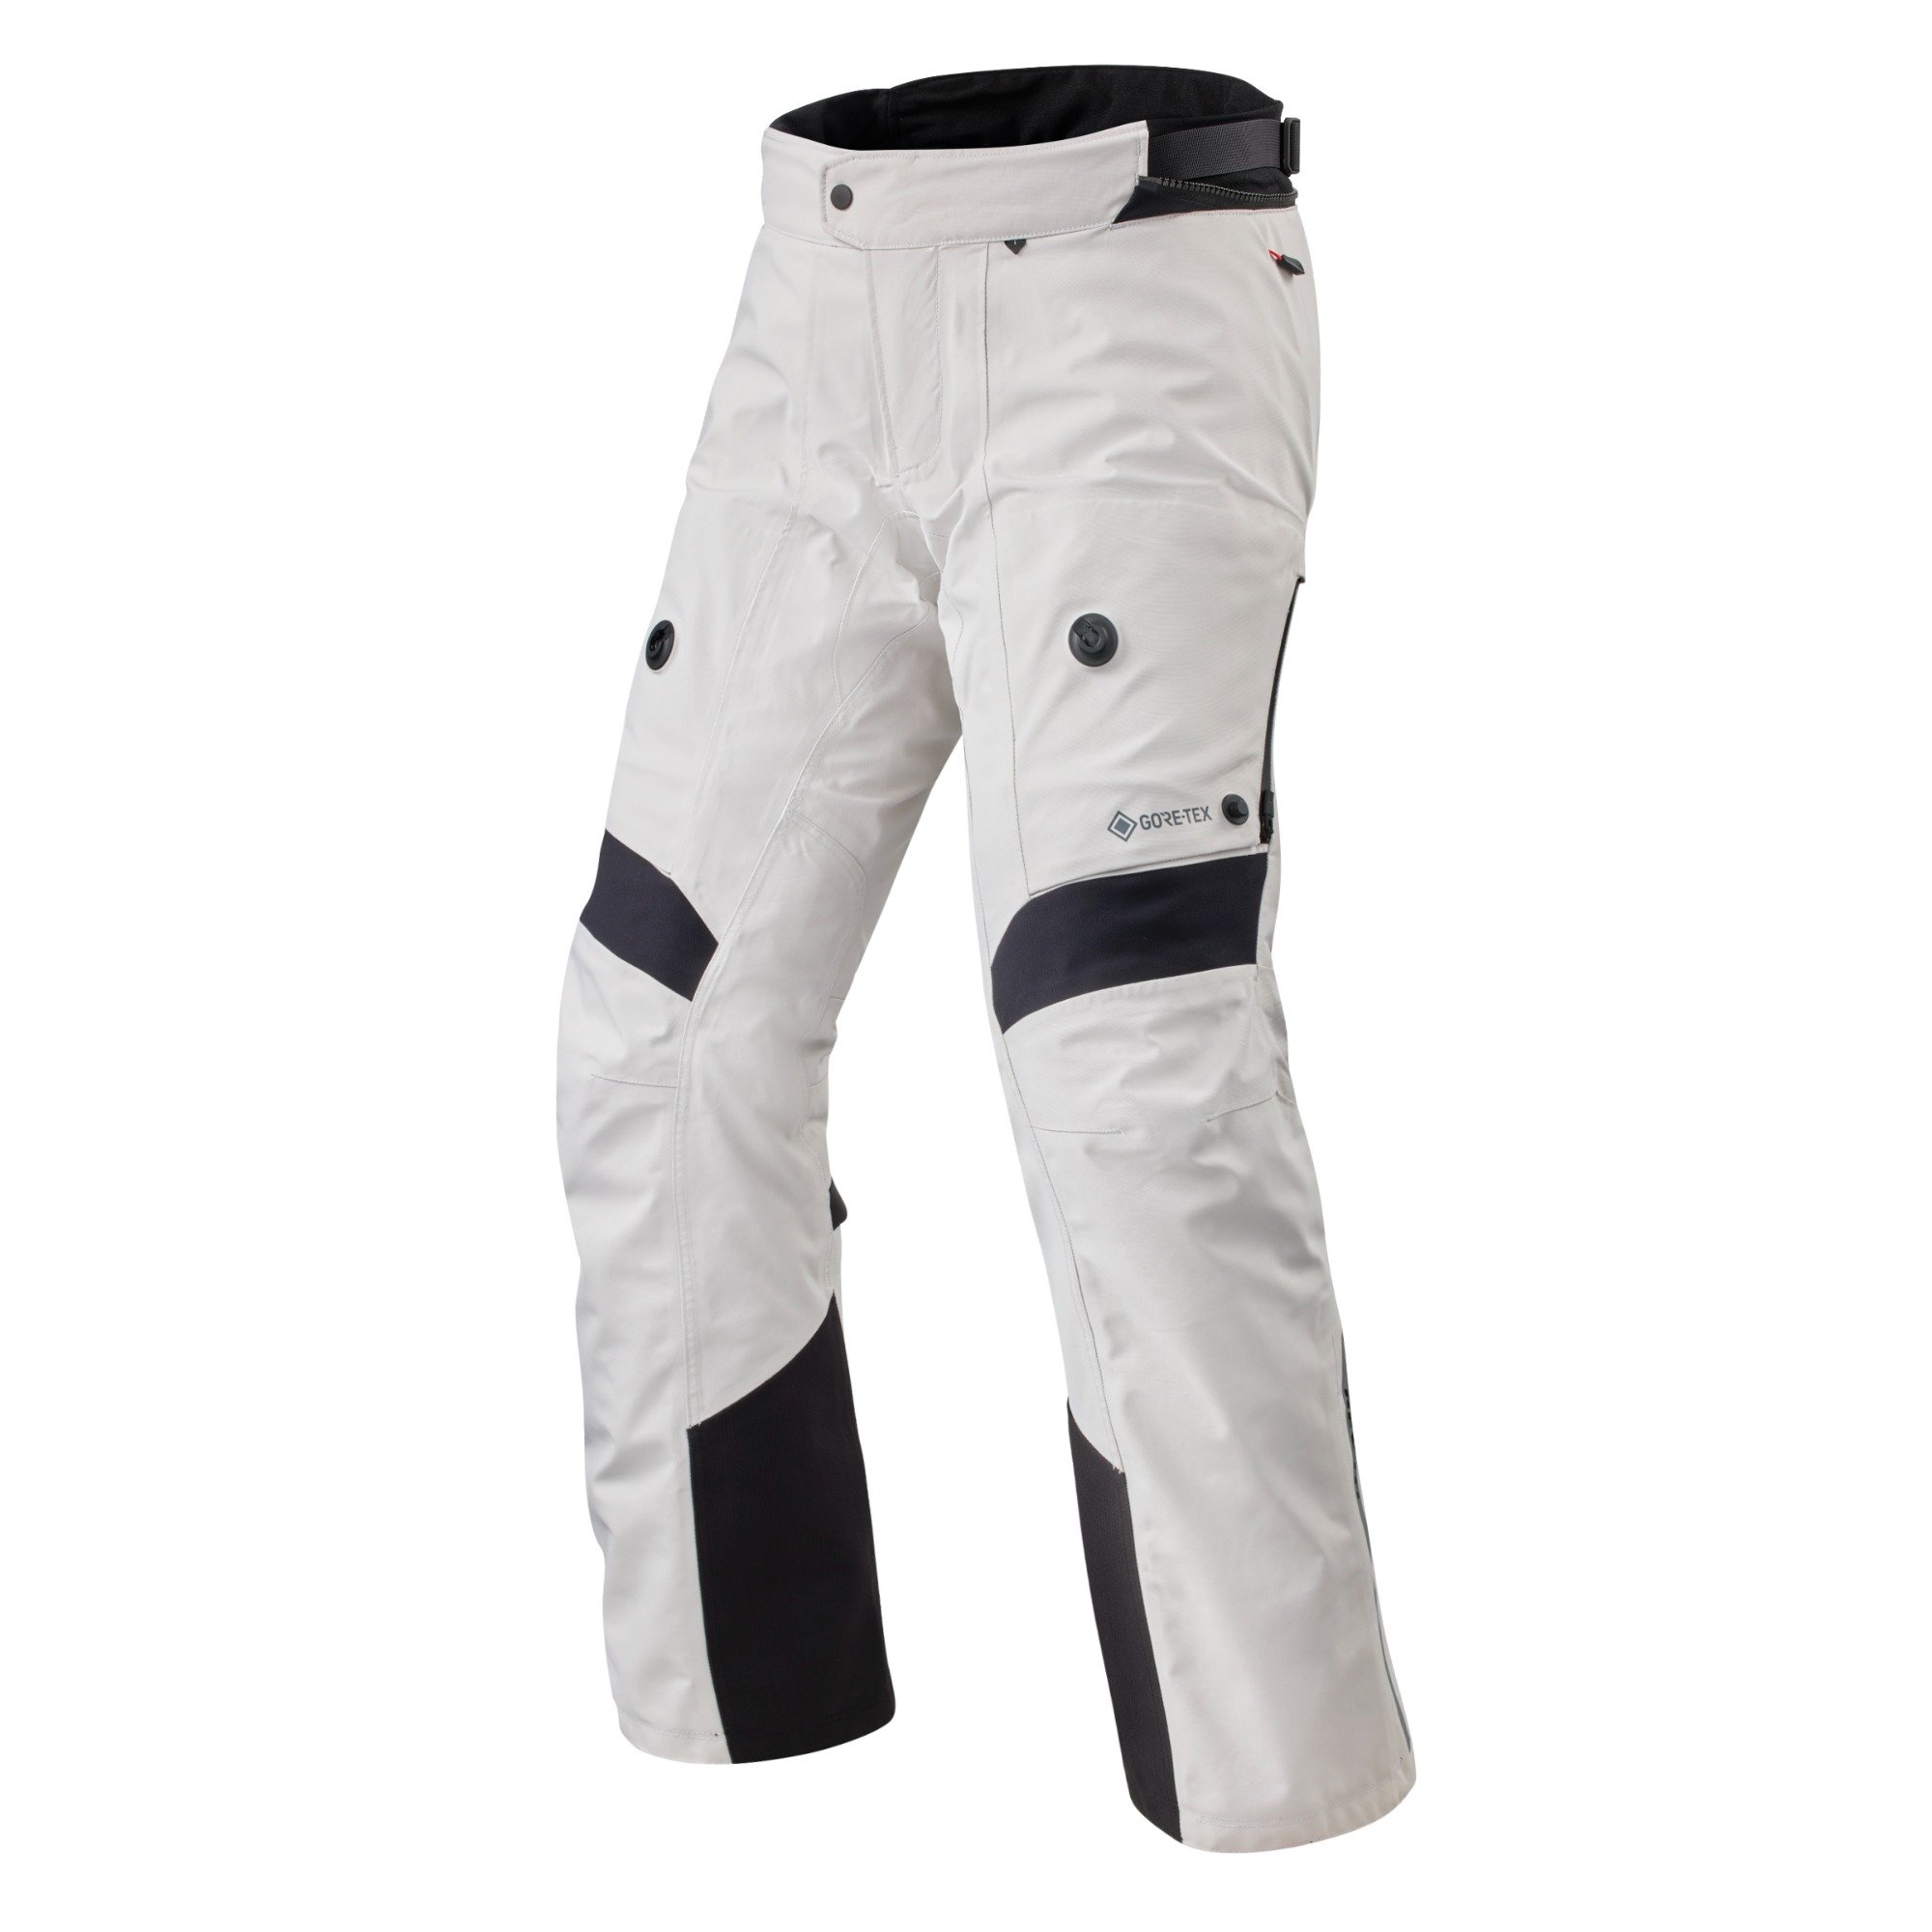 Image of REV'IT! Pants Poseidon 3 GTX Silver Black Short Motorcycle Pants Size XL ID 8700001362665